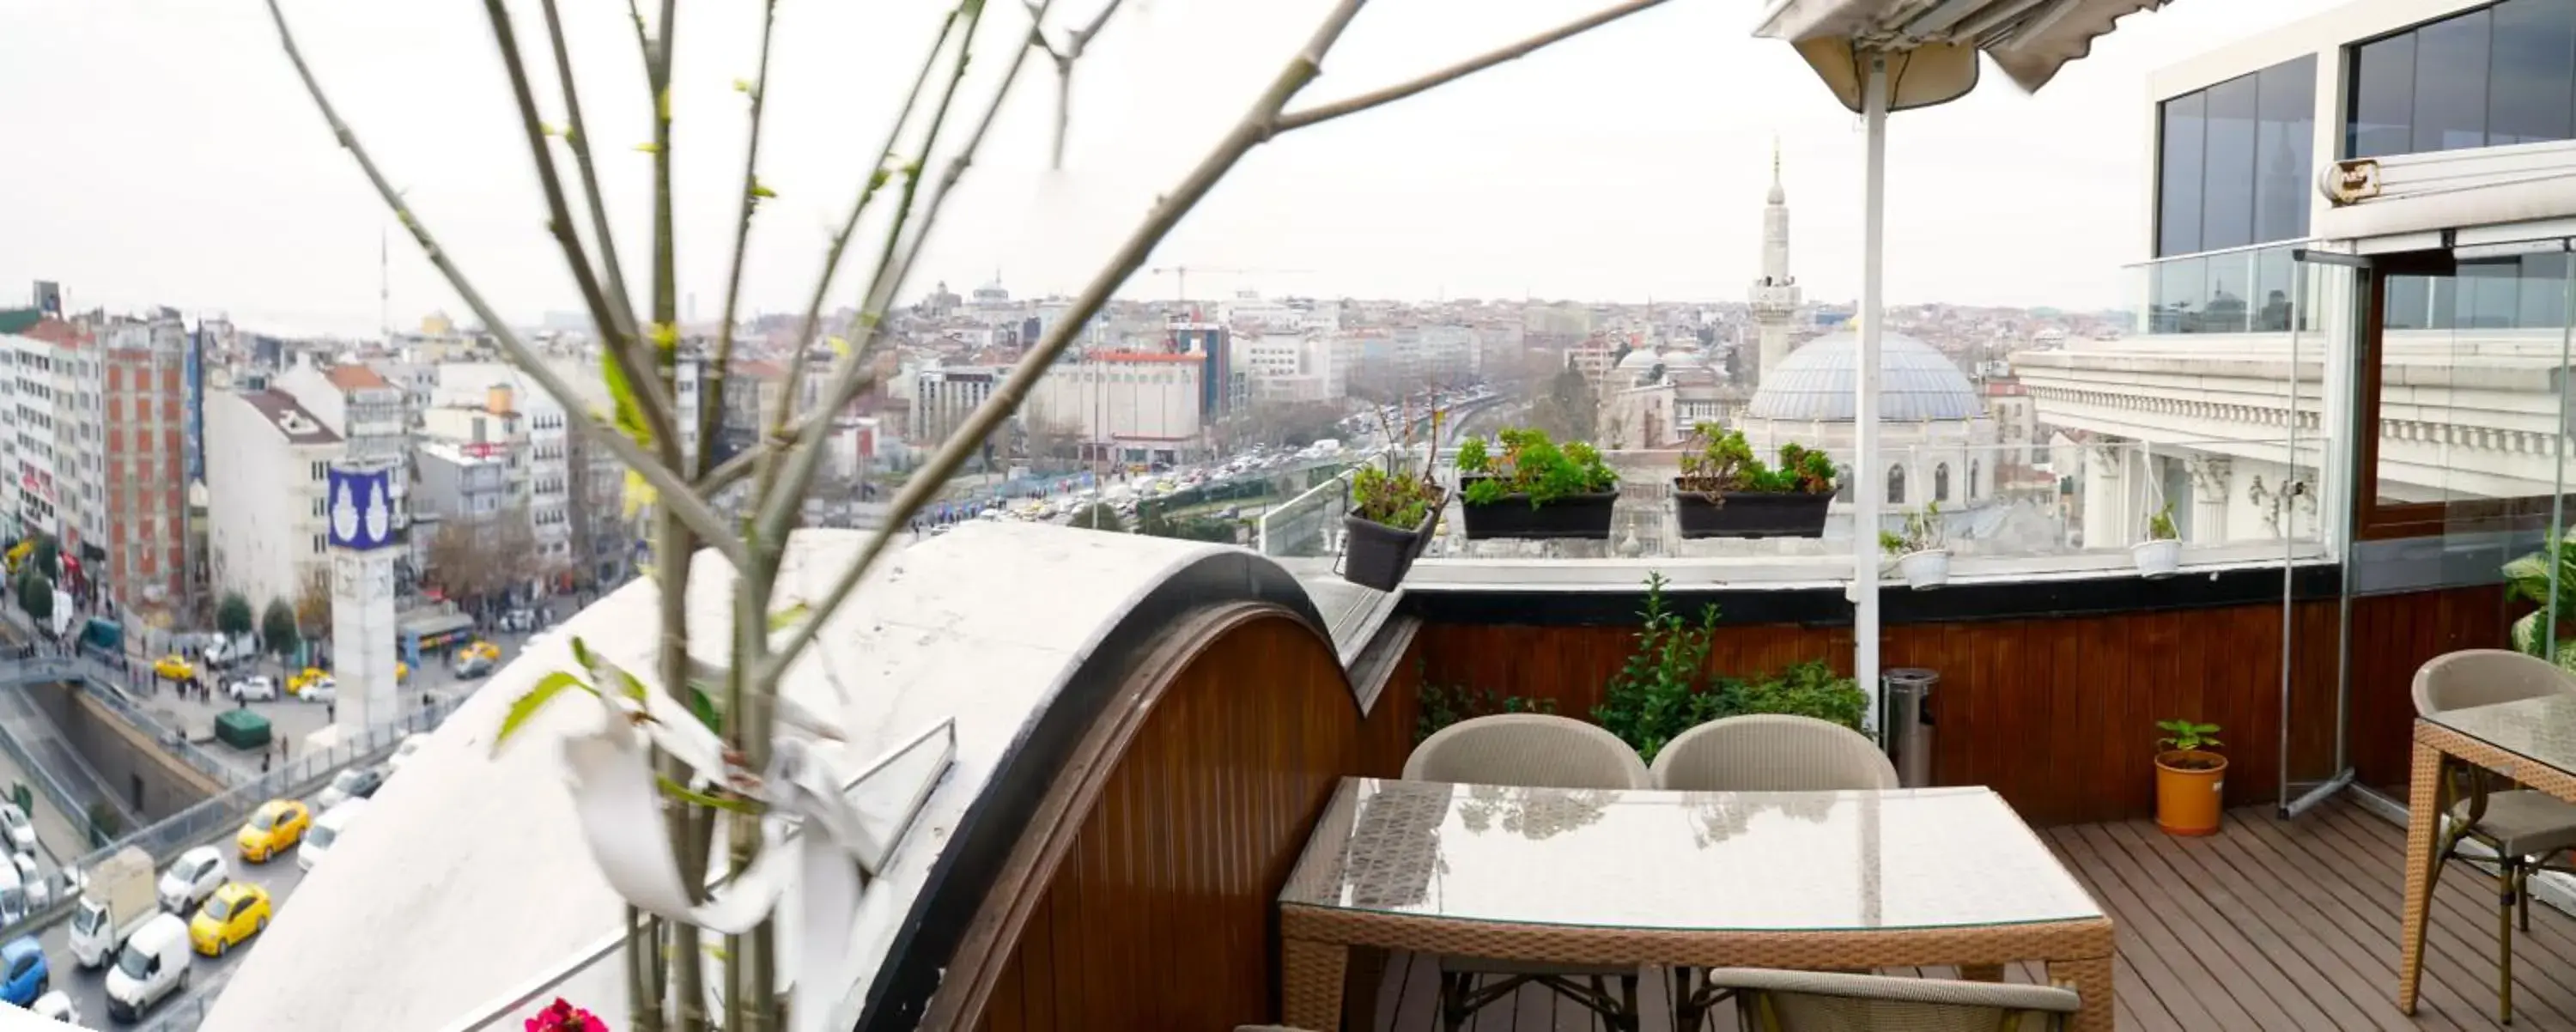 Balcony/Terrace in parmadahoteloldcity